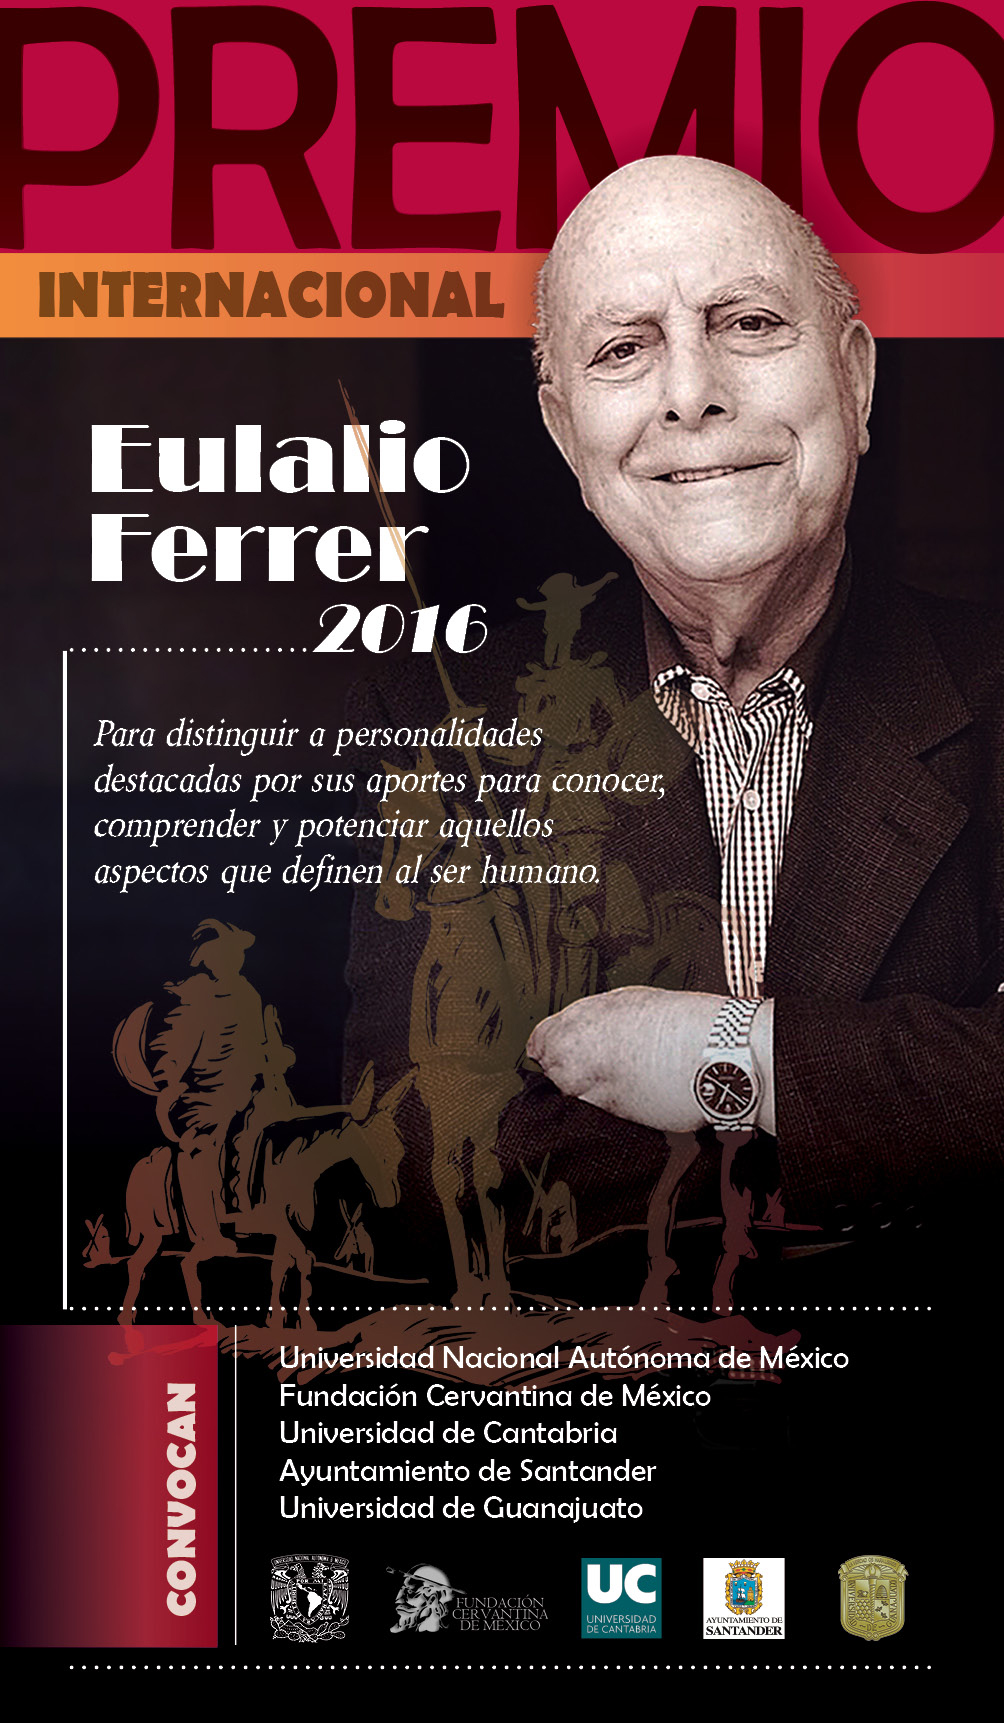 Premio Internacional Eulalio Ferrer 2016